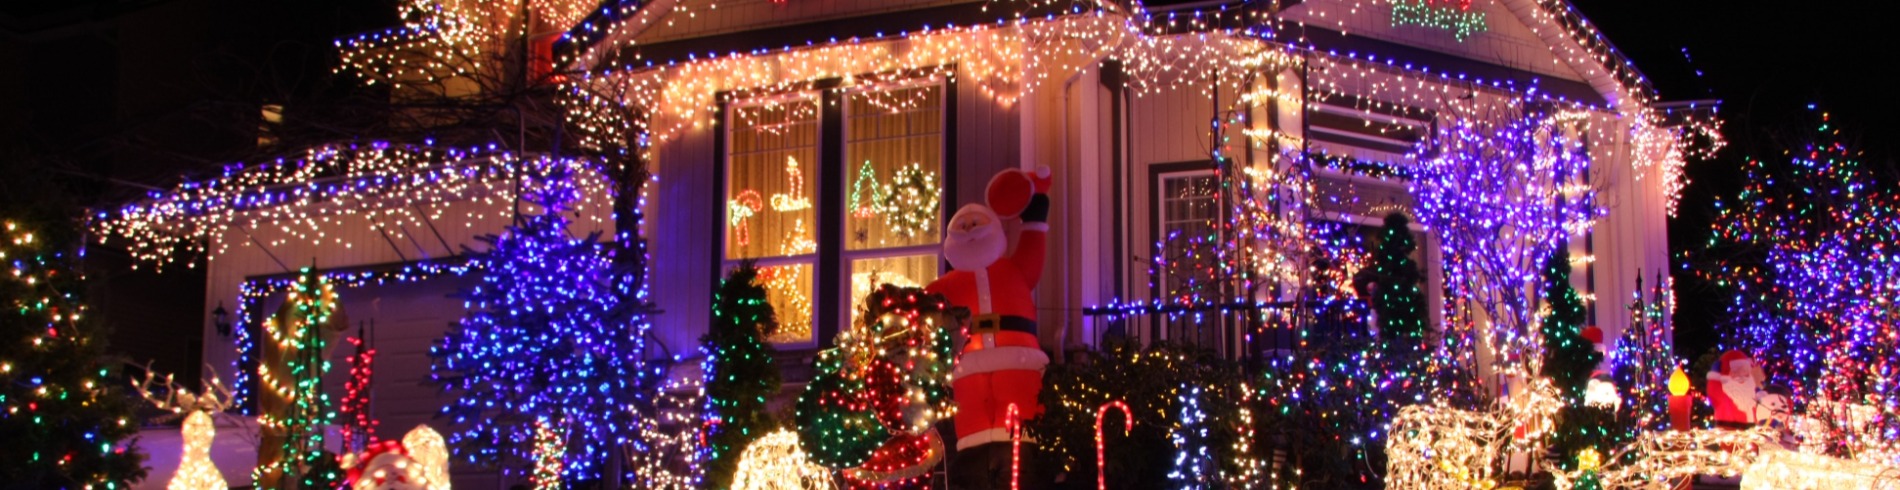 Christmas lights decorating a house